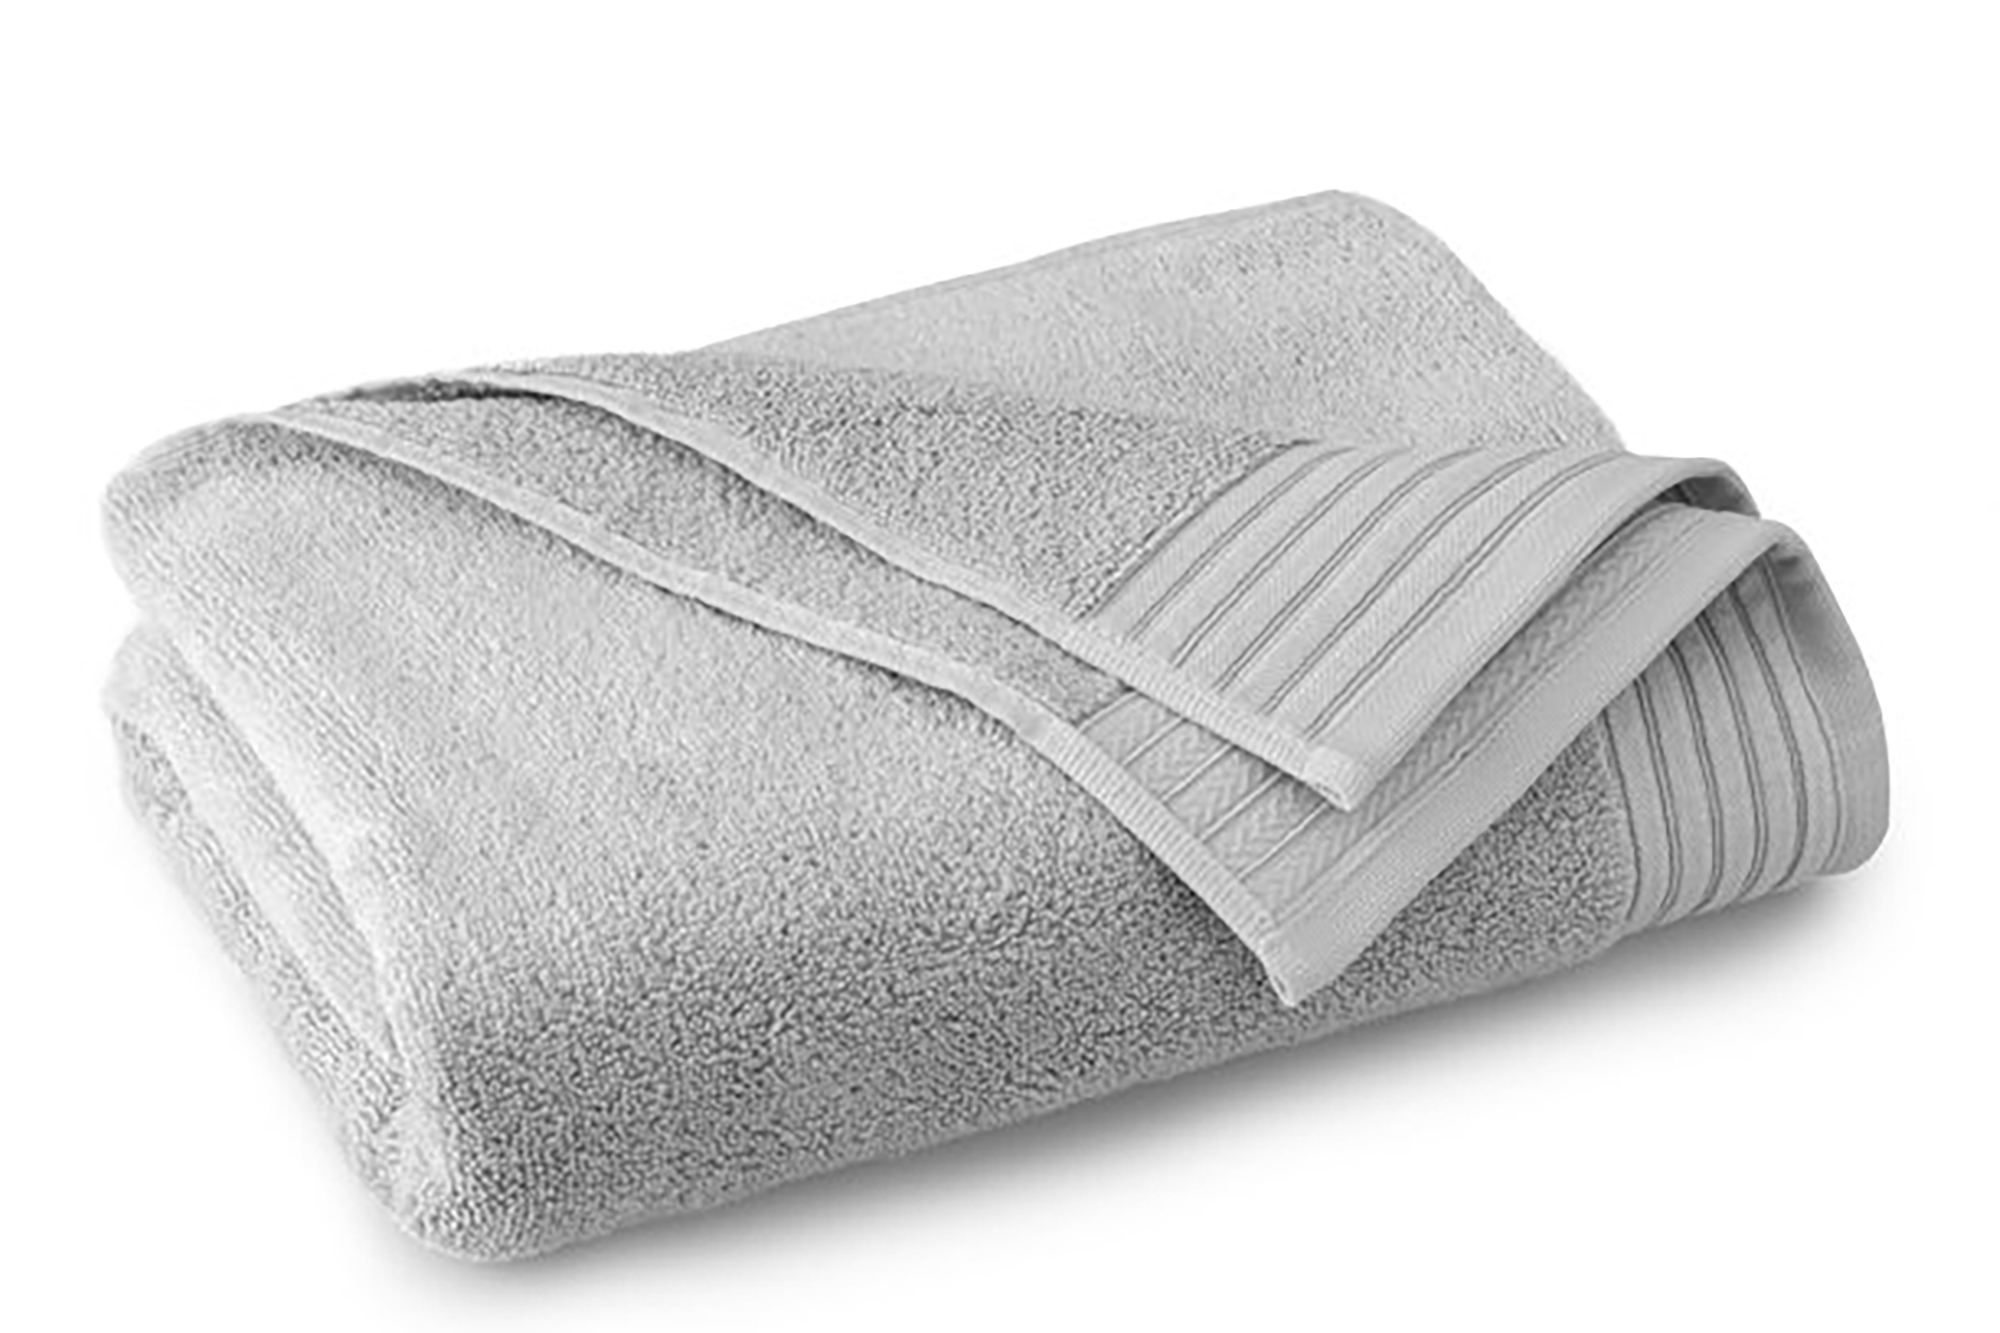 A gray bath towel folded up 